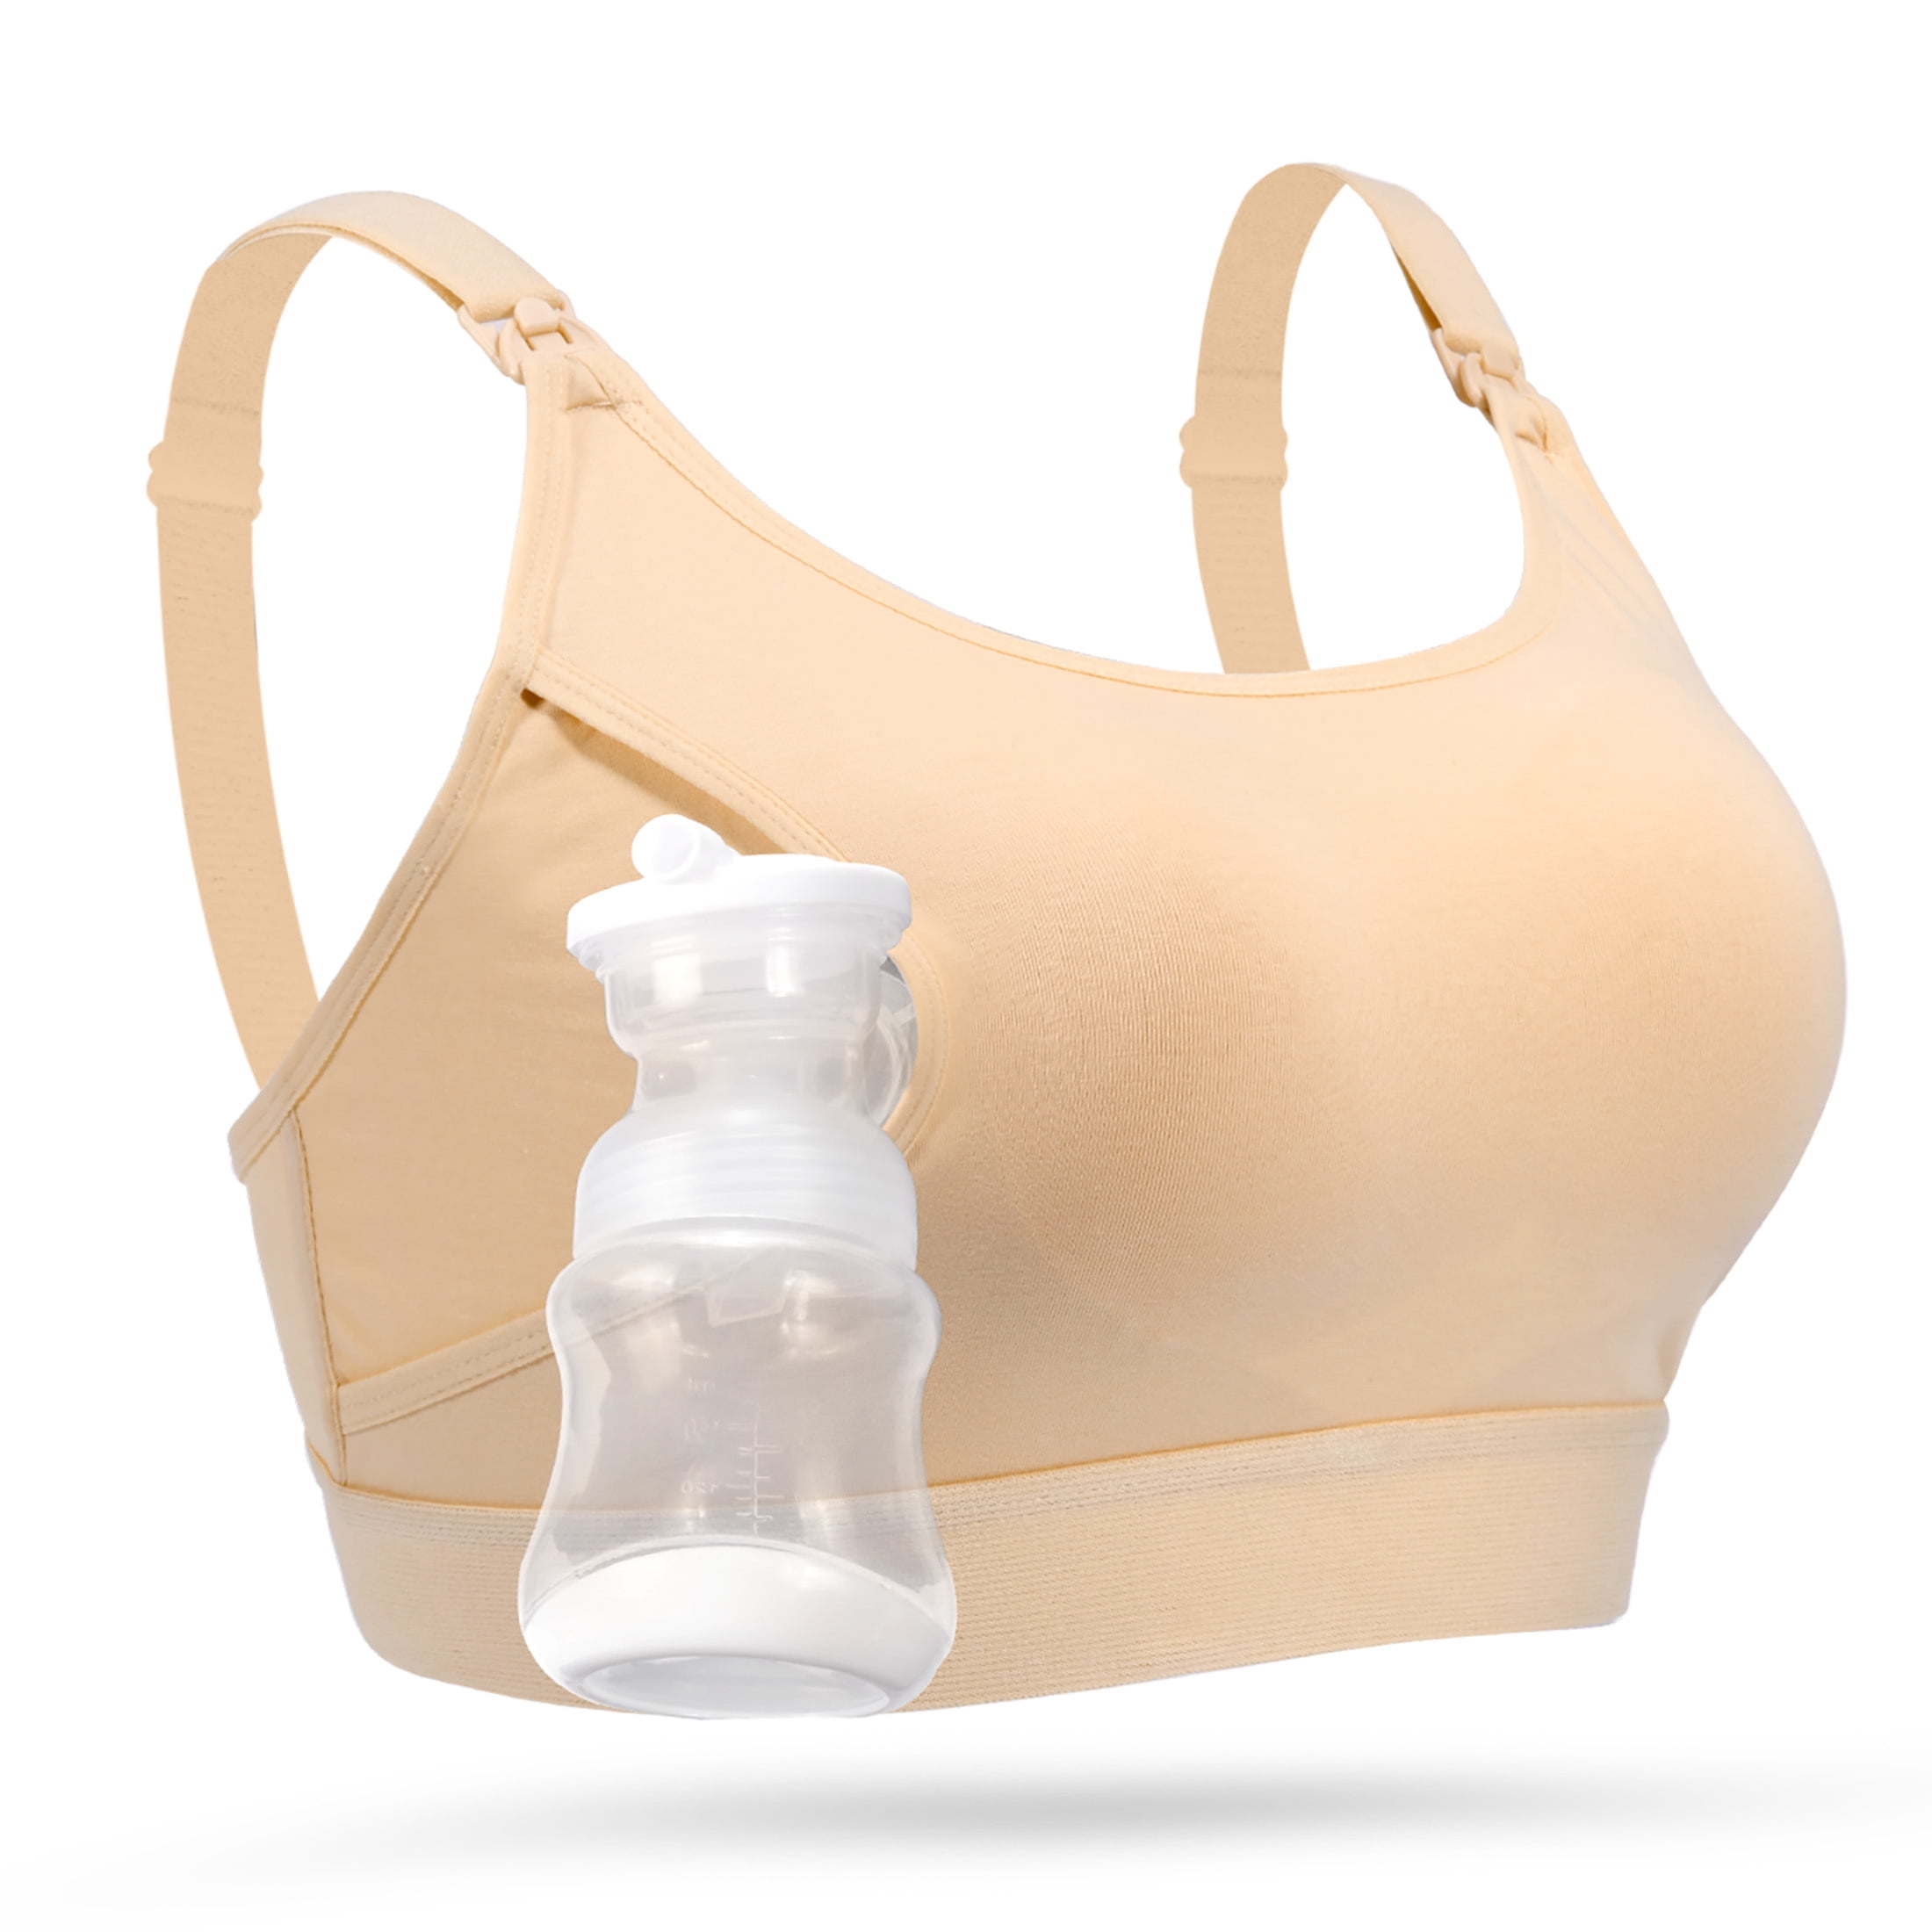 momcozy nursing bras have been a lifesaver throughout my breastfeedin